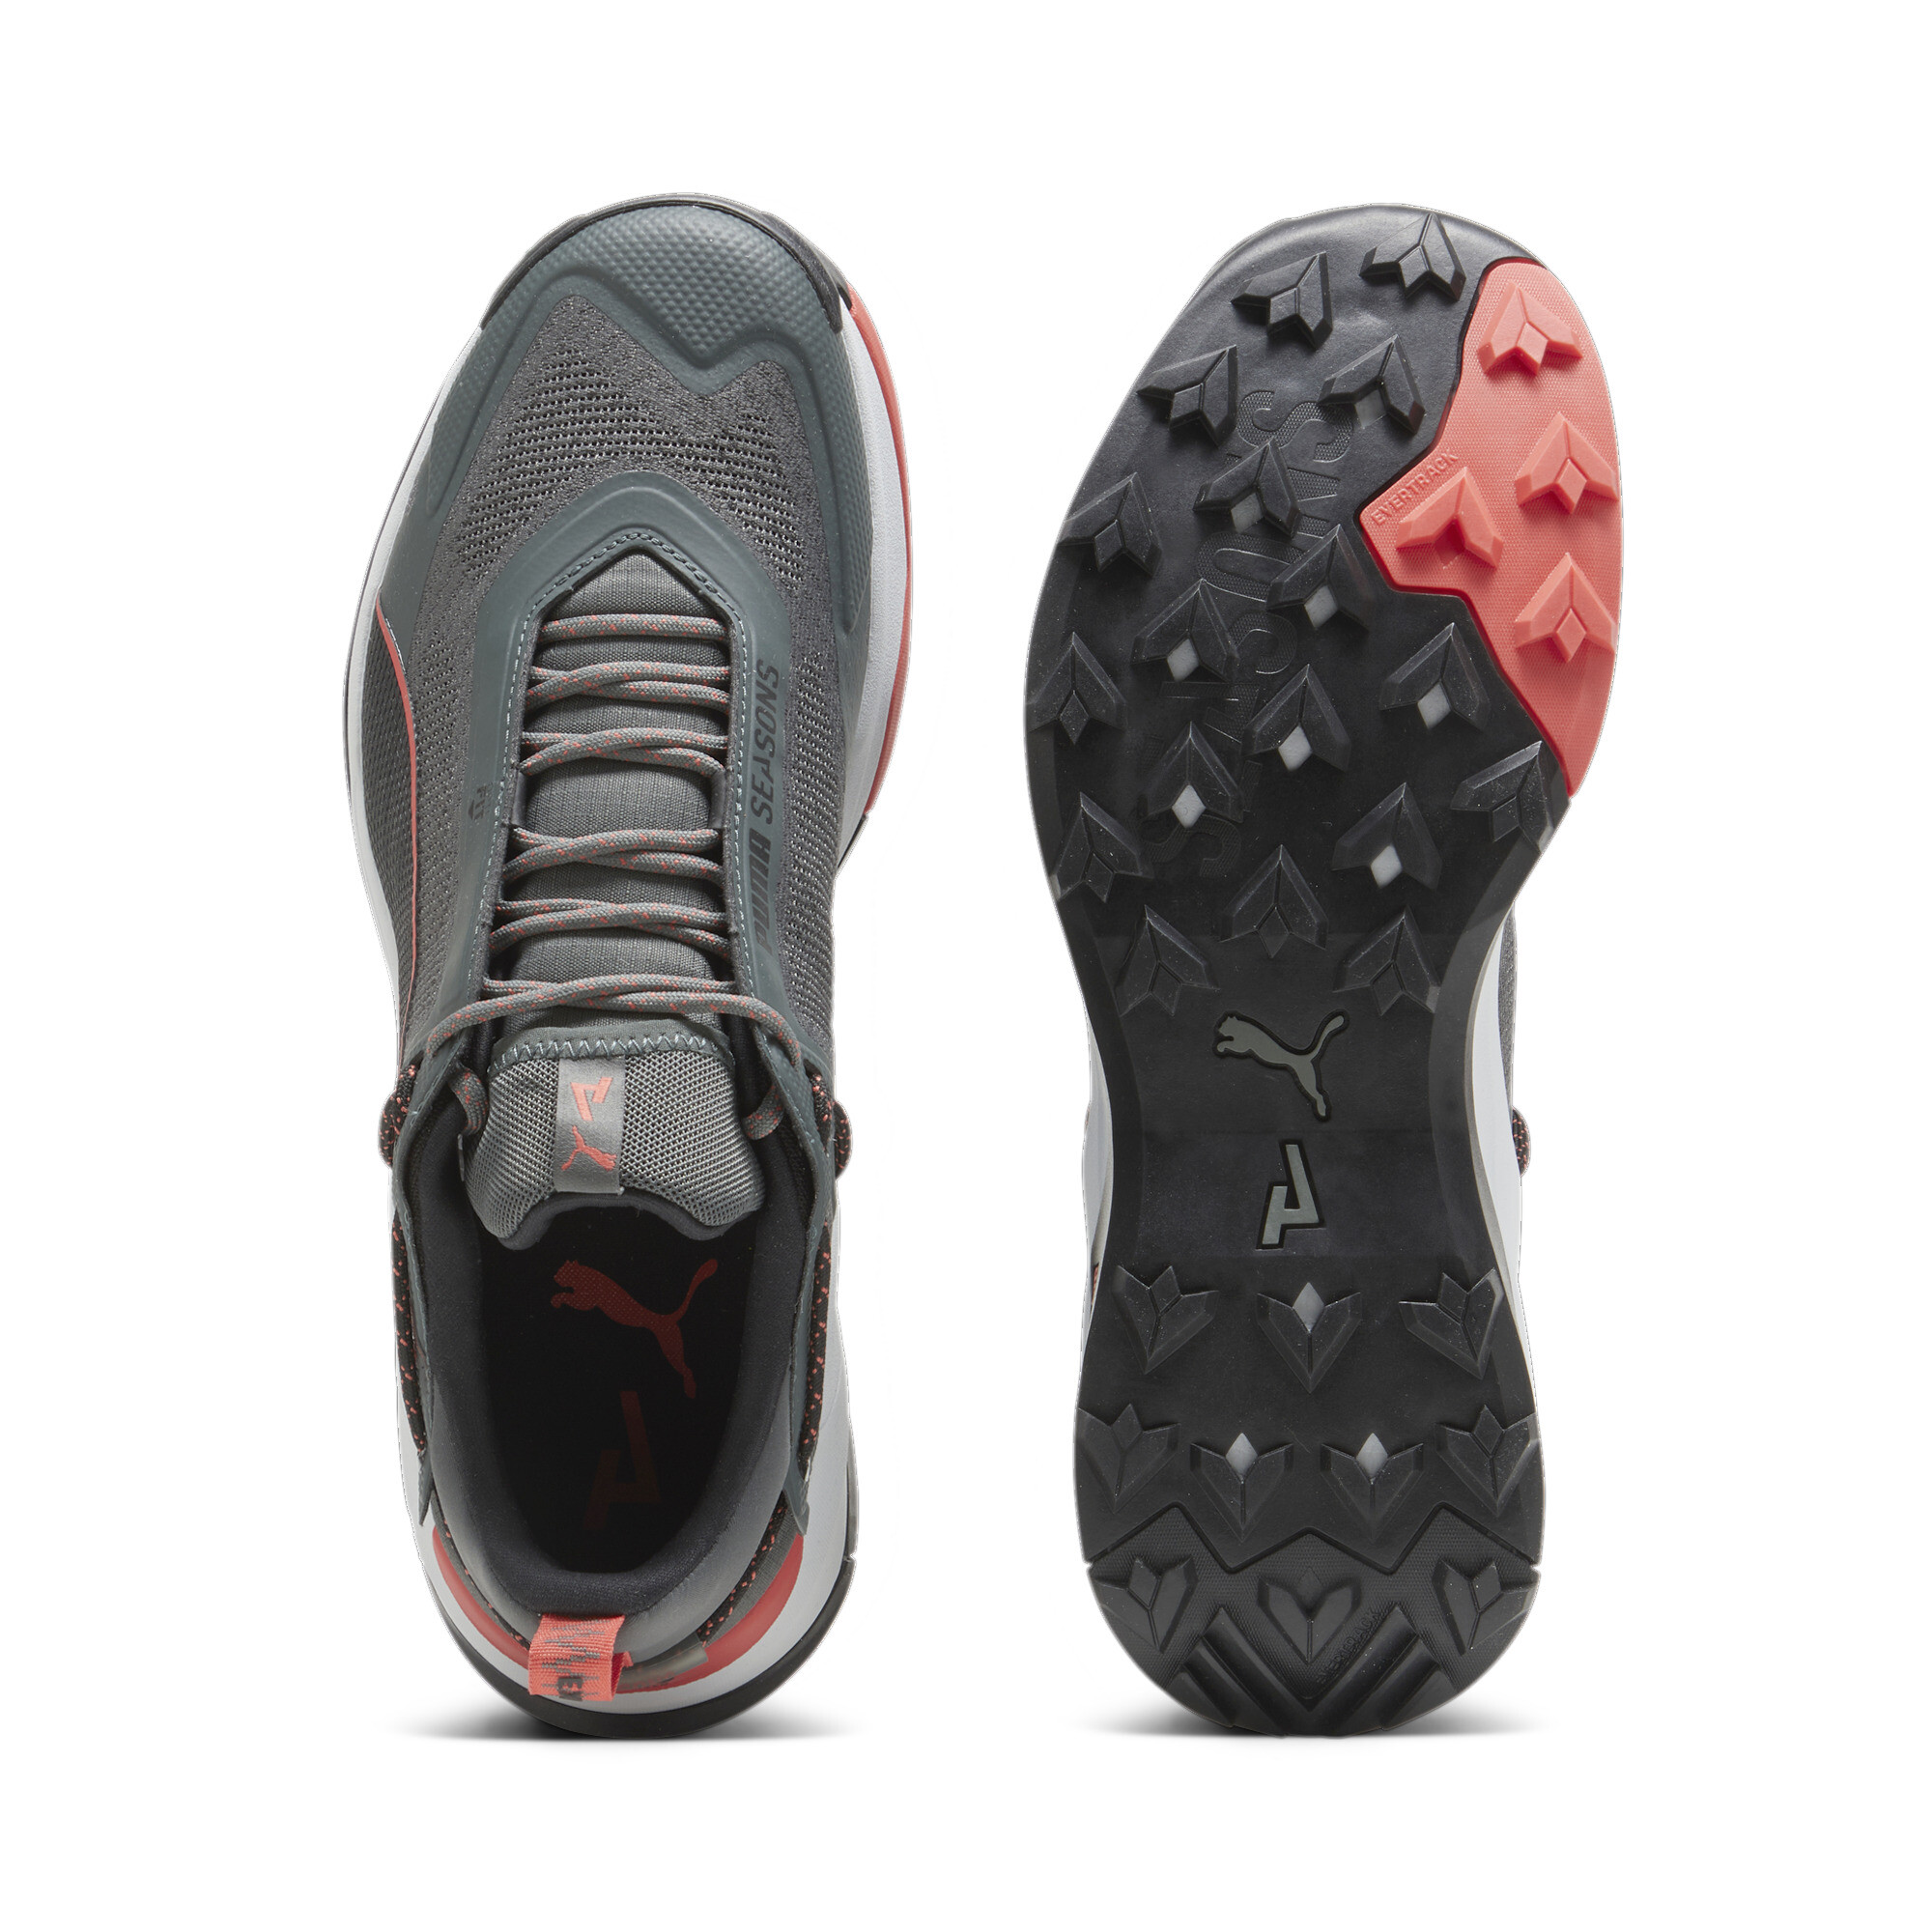 Men's PUMA Explore NITROâ¢ Hiking Shoes In Gray, Size EU 42.5